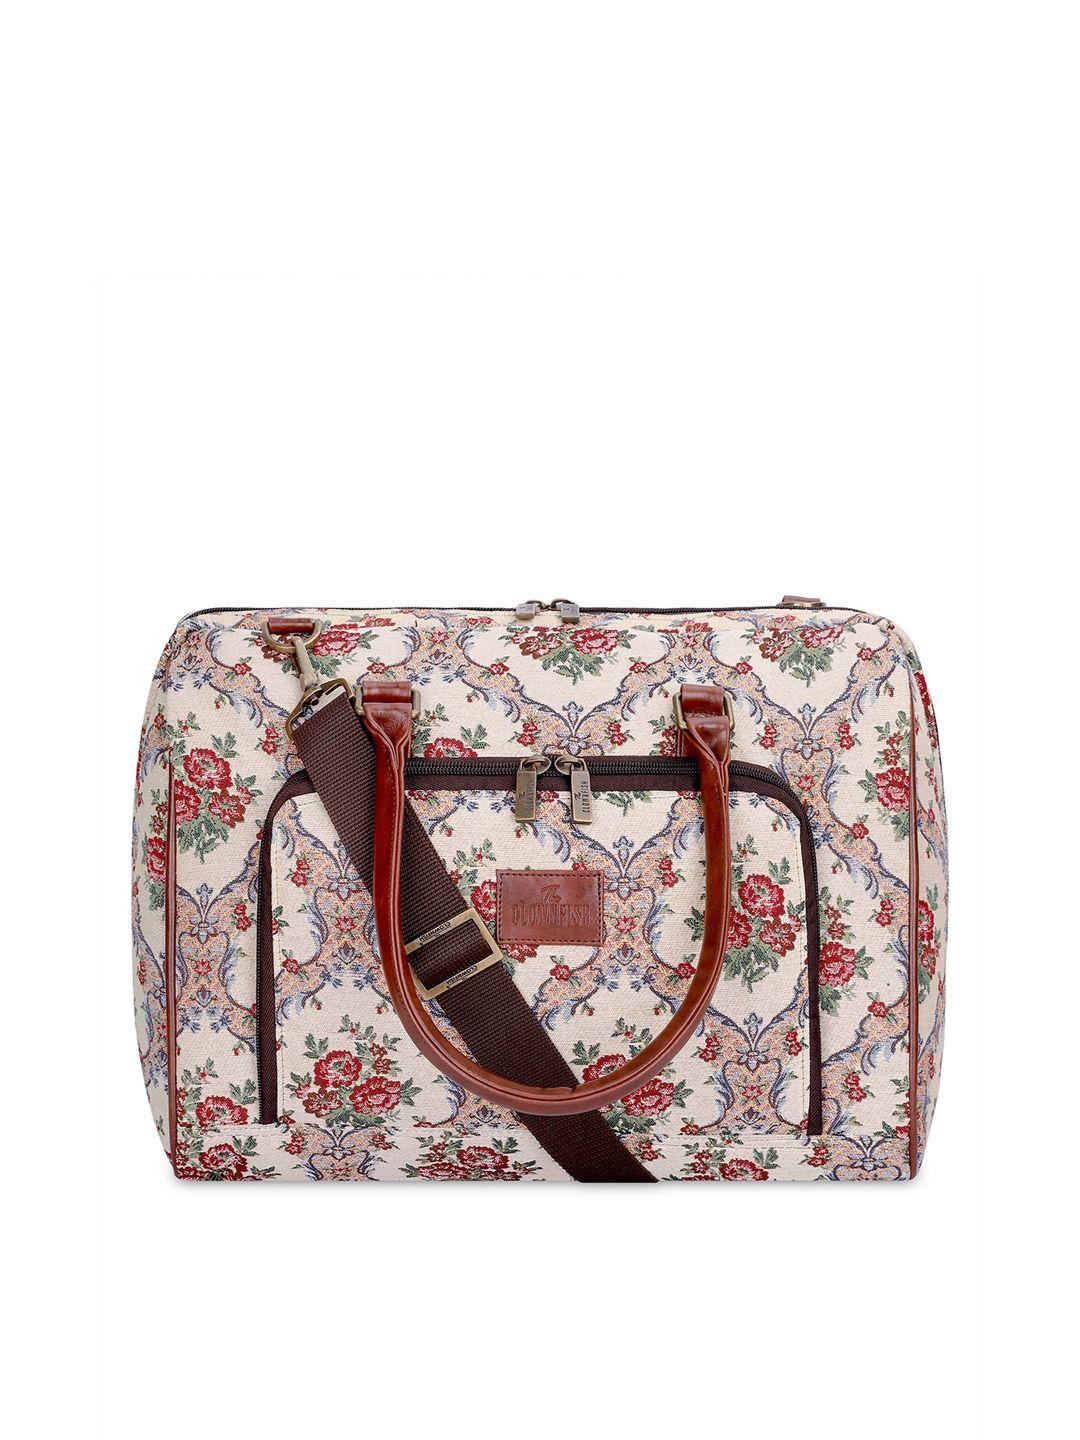 the-clownfish-floral-printed-travel-duffel-bag